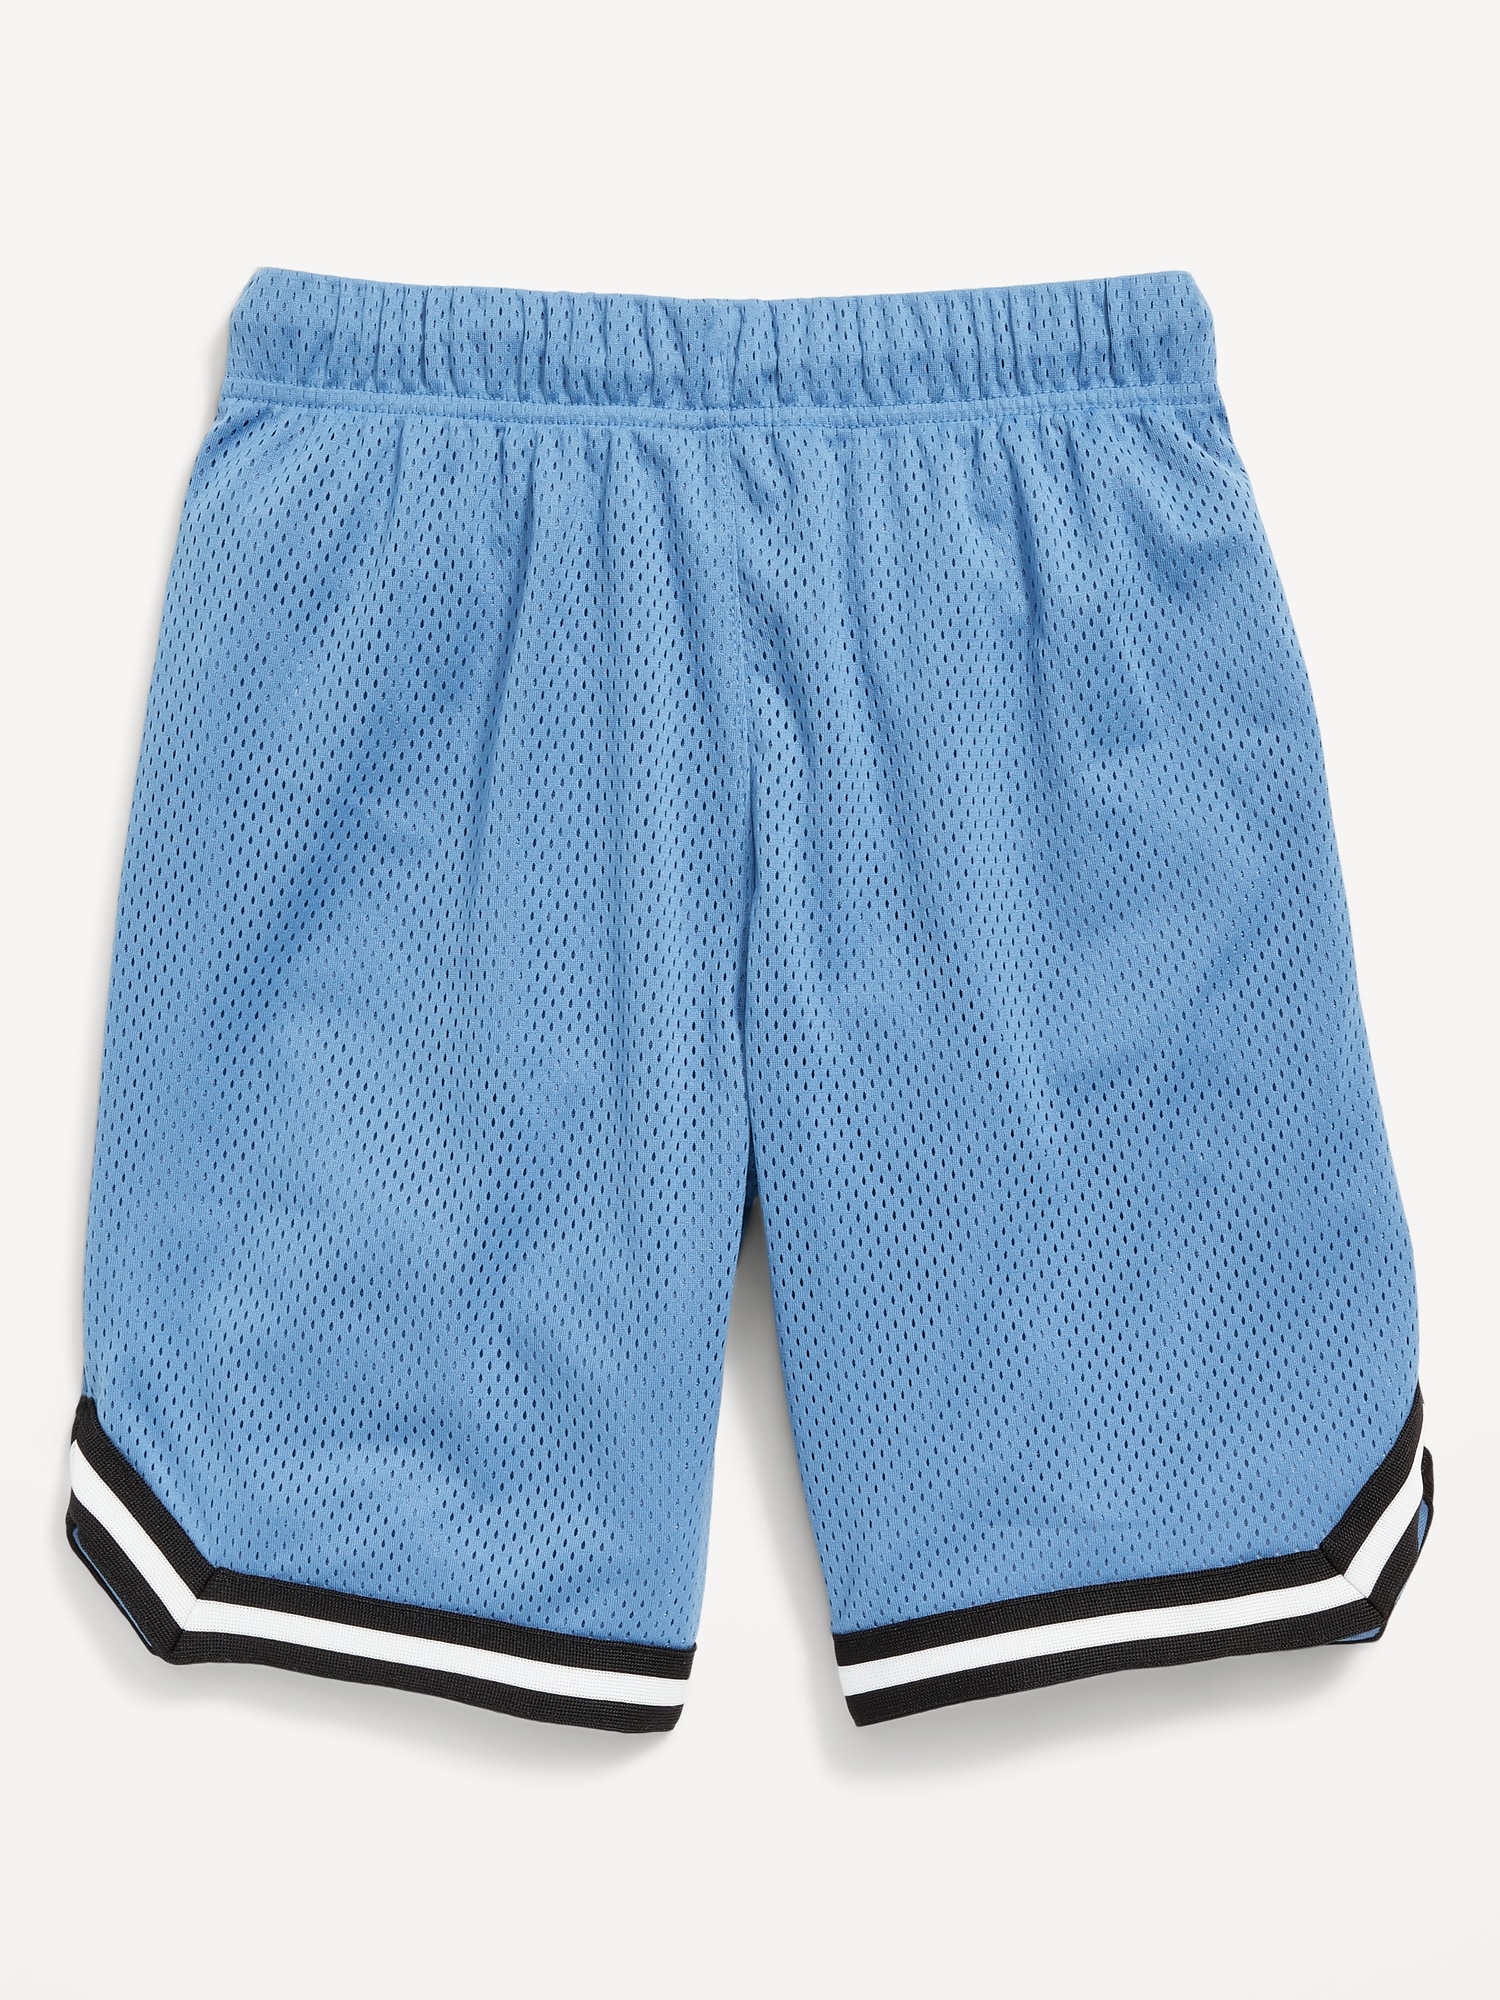 basketball shorts blue